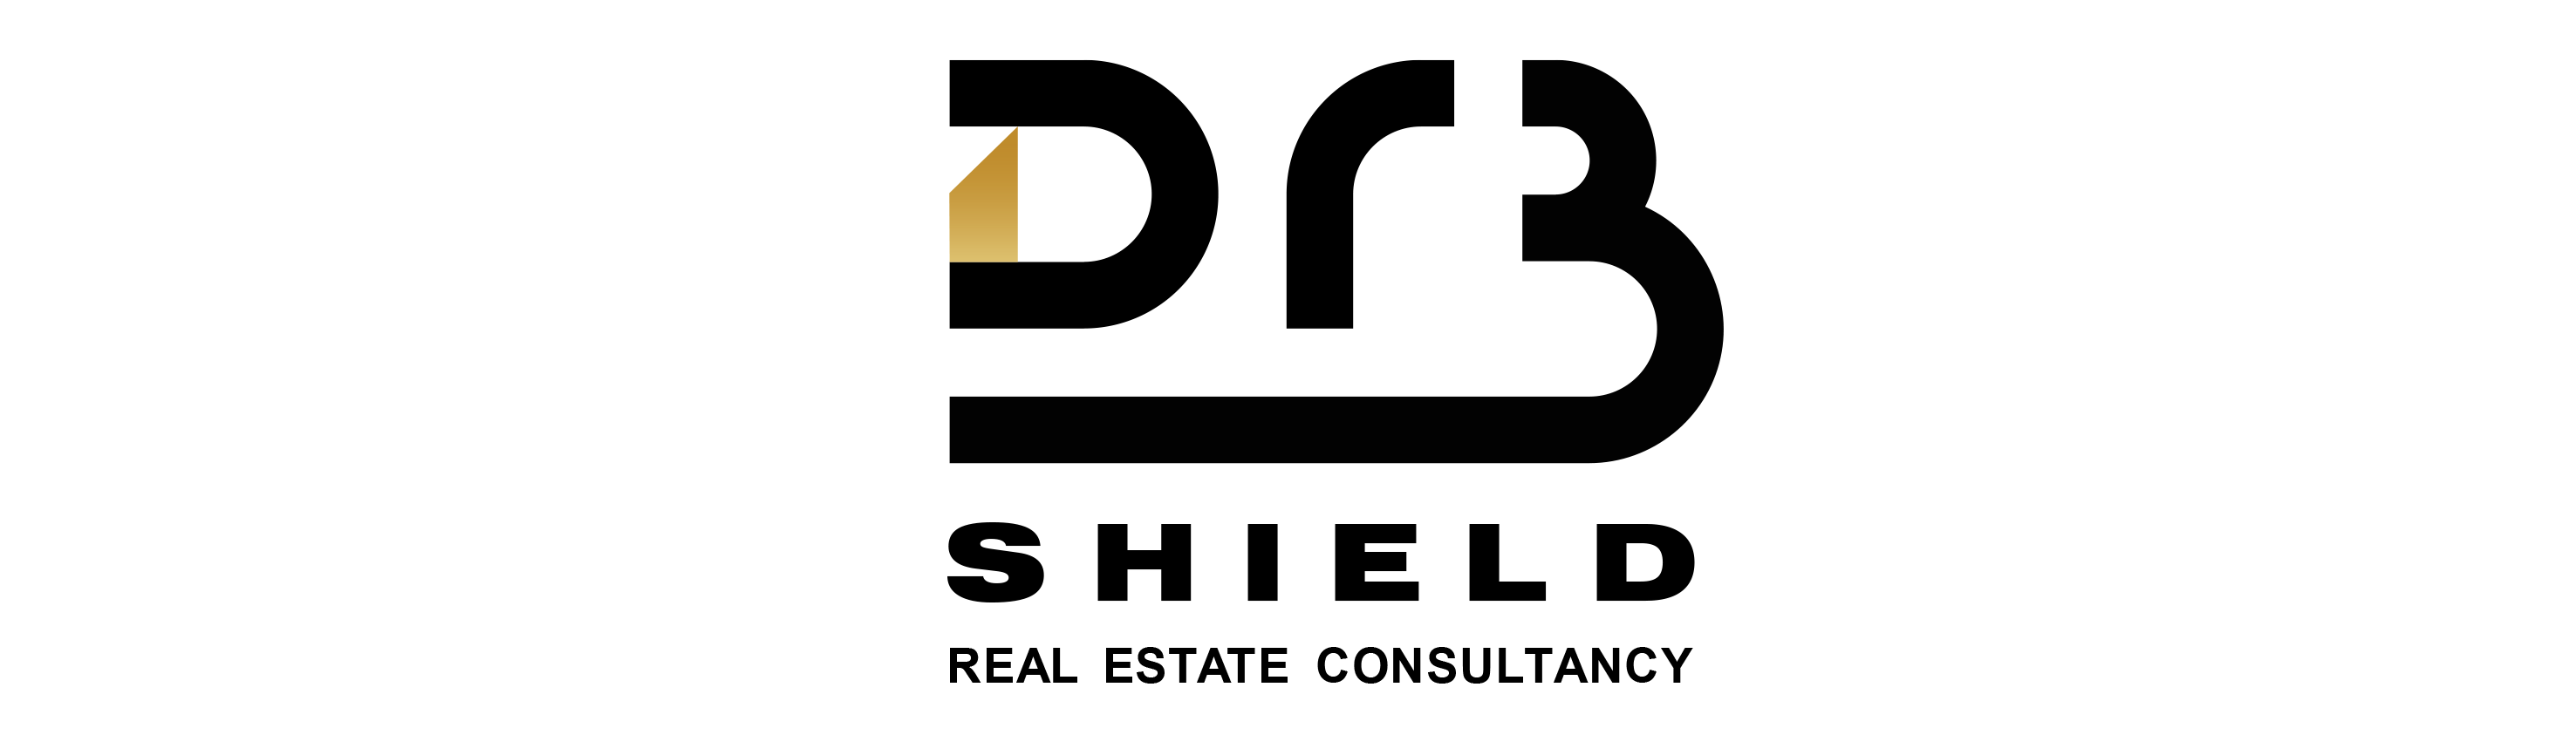 Dr3 Shield